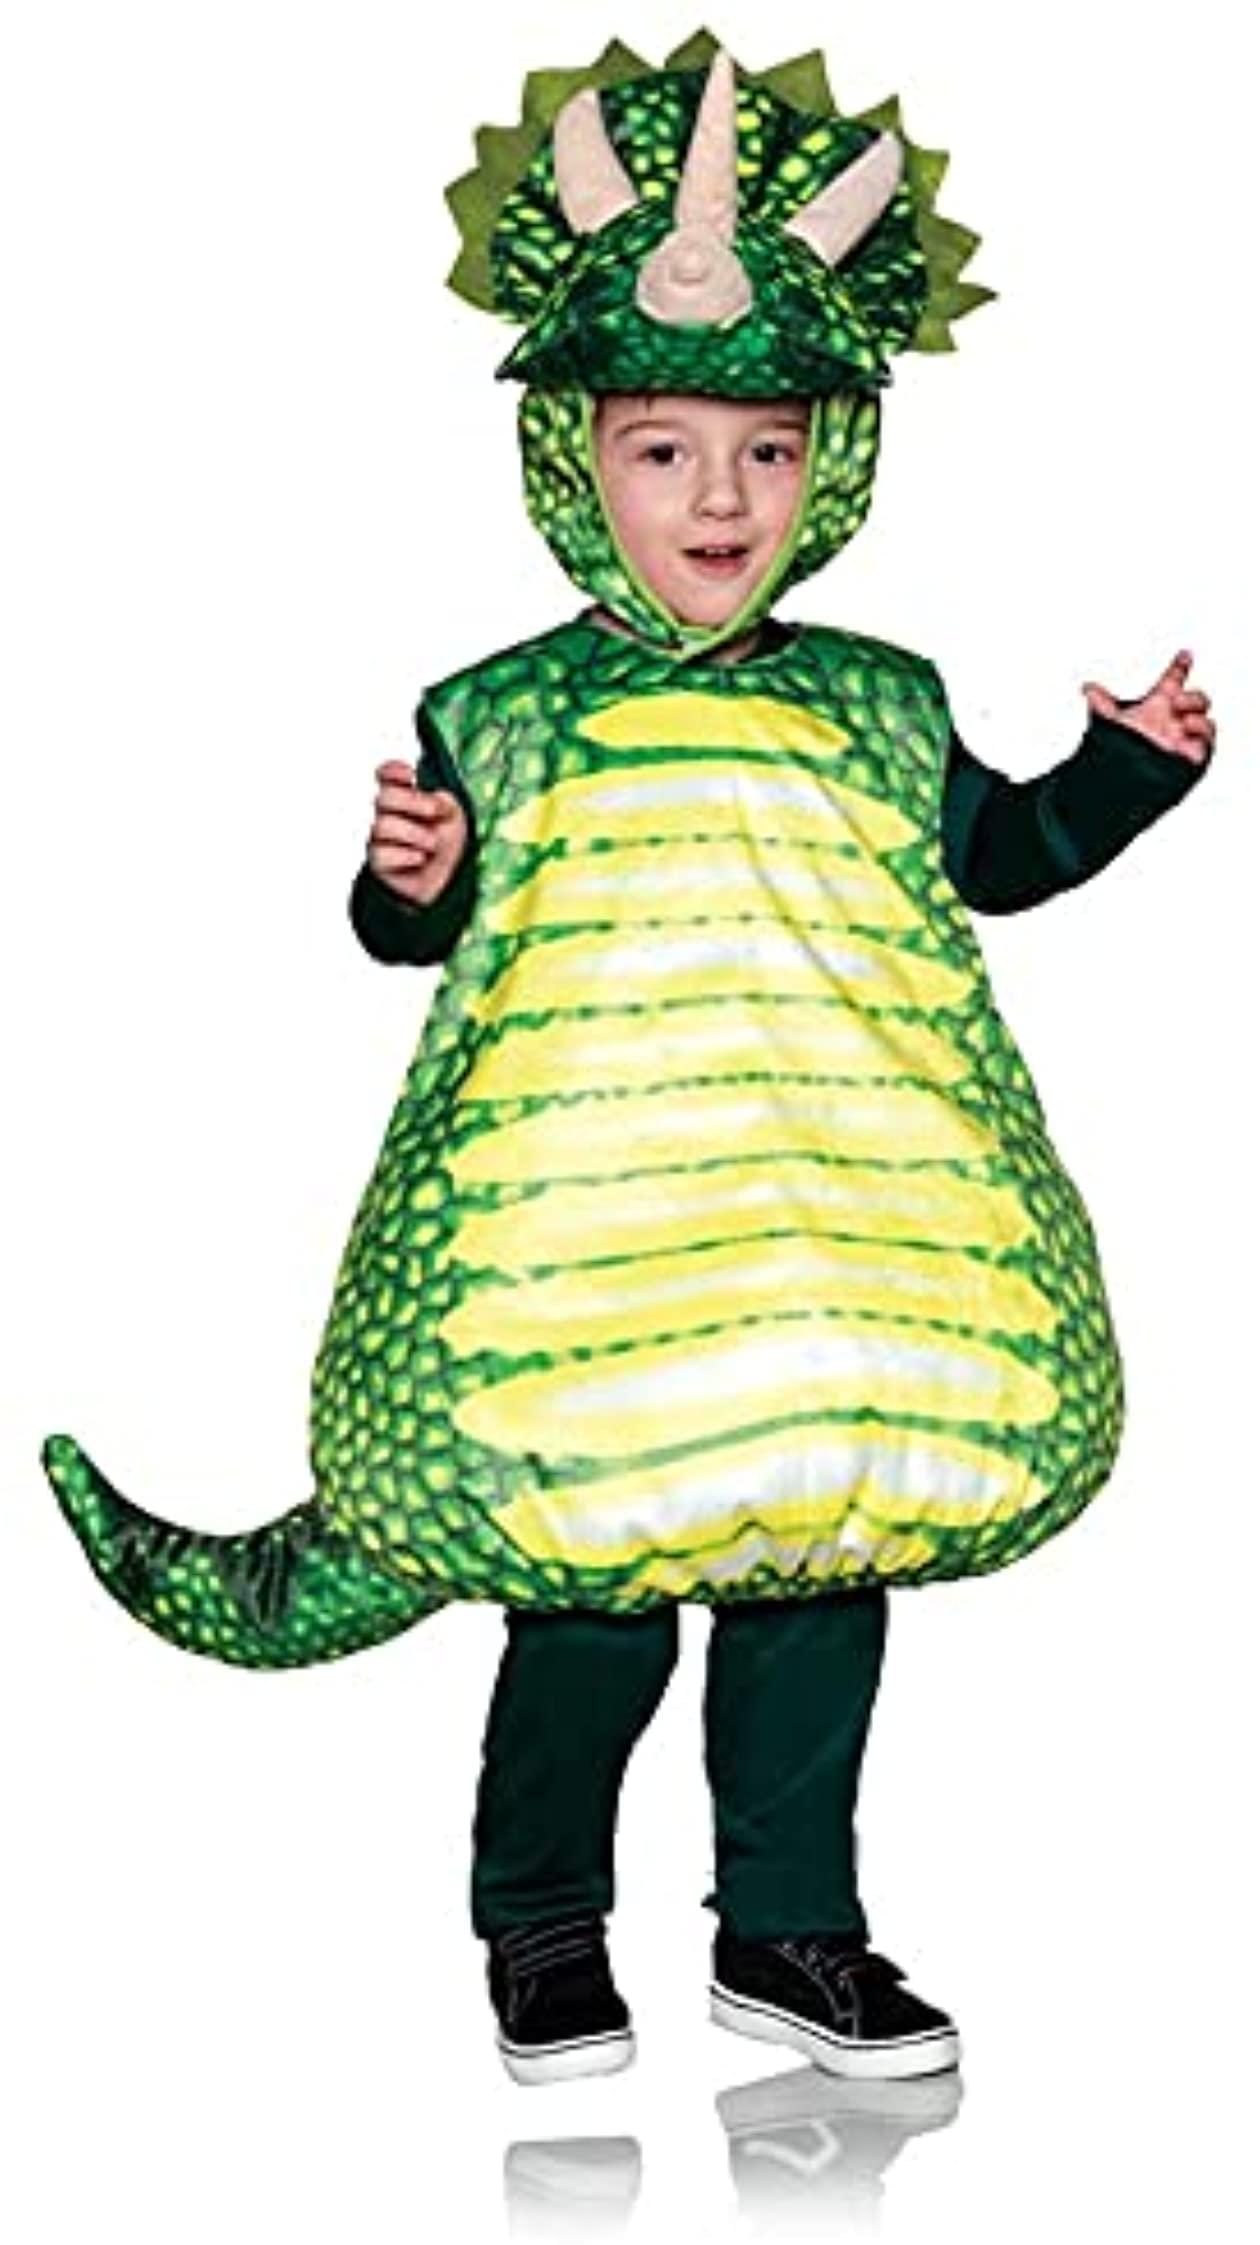 Triceratops Green Printed Children's Costume